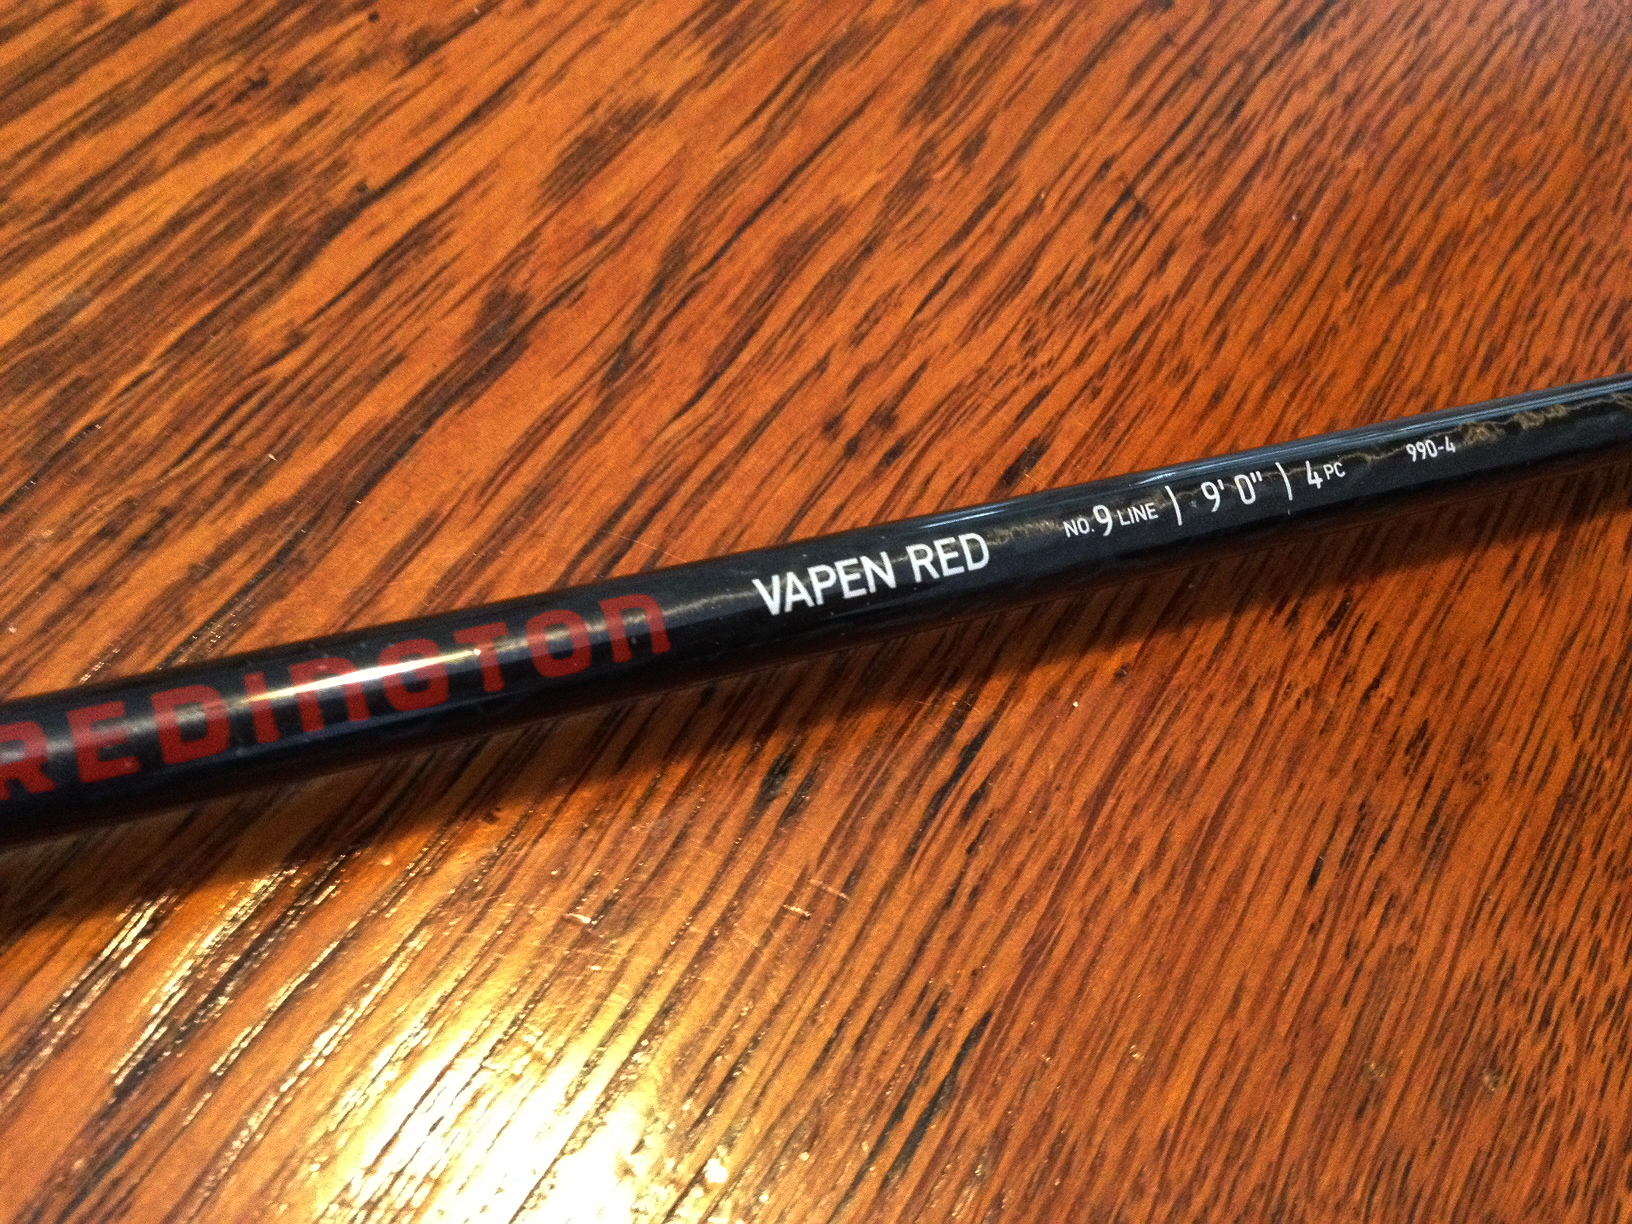 GEAR REVIEW: Redington Vapen Red fly rod